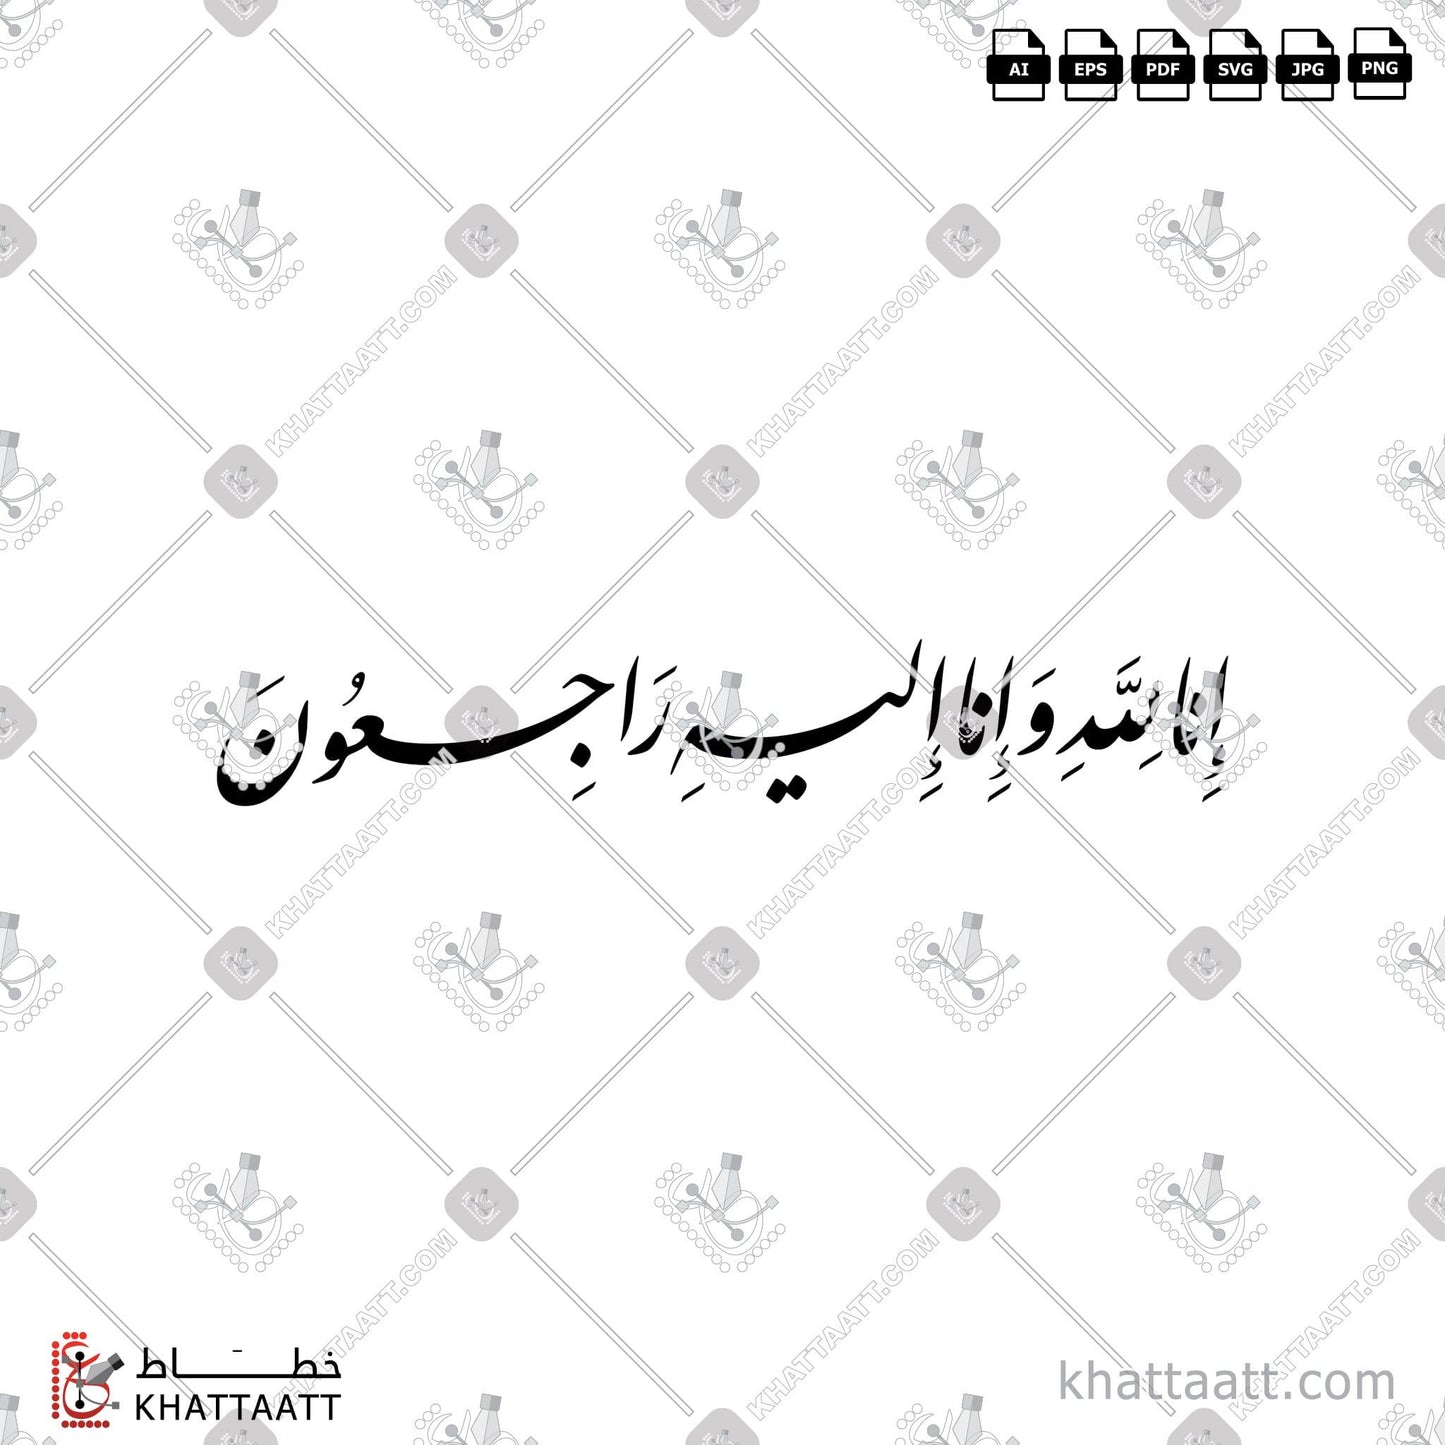 Download Arabic Calligraphy of إنا لله وإنا إليه راجعون in Farsi - الخط الفارسي in vector and .png